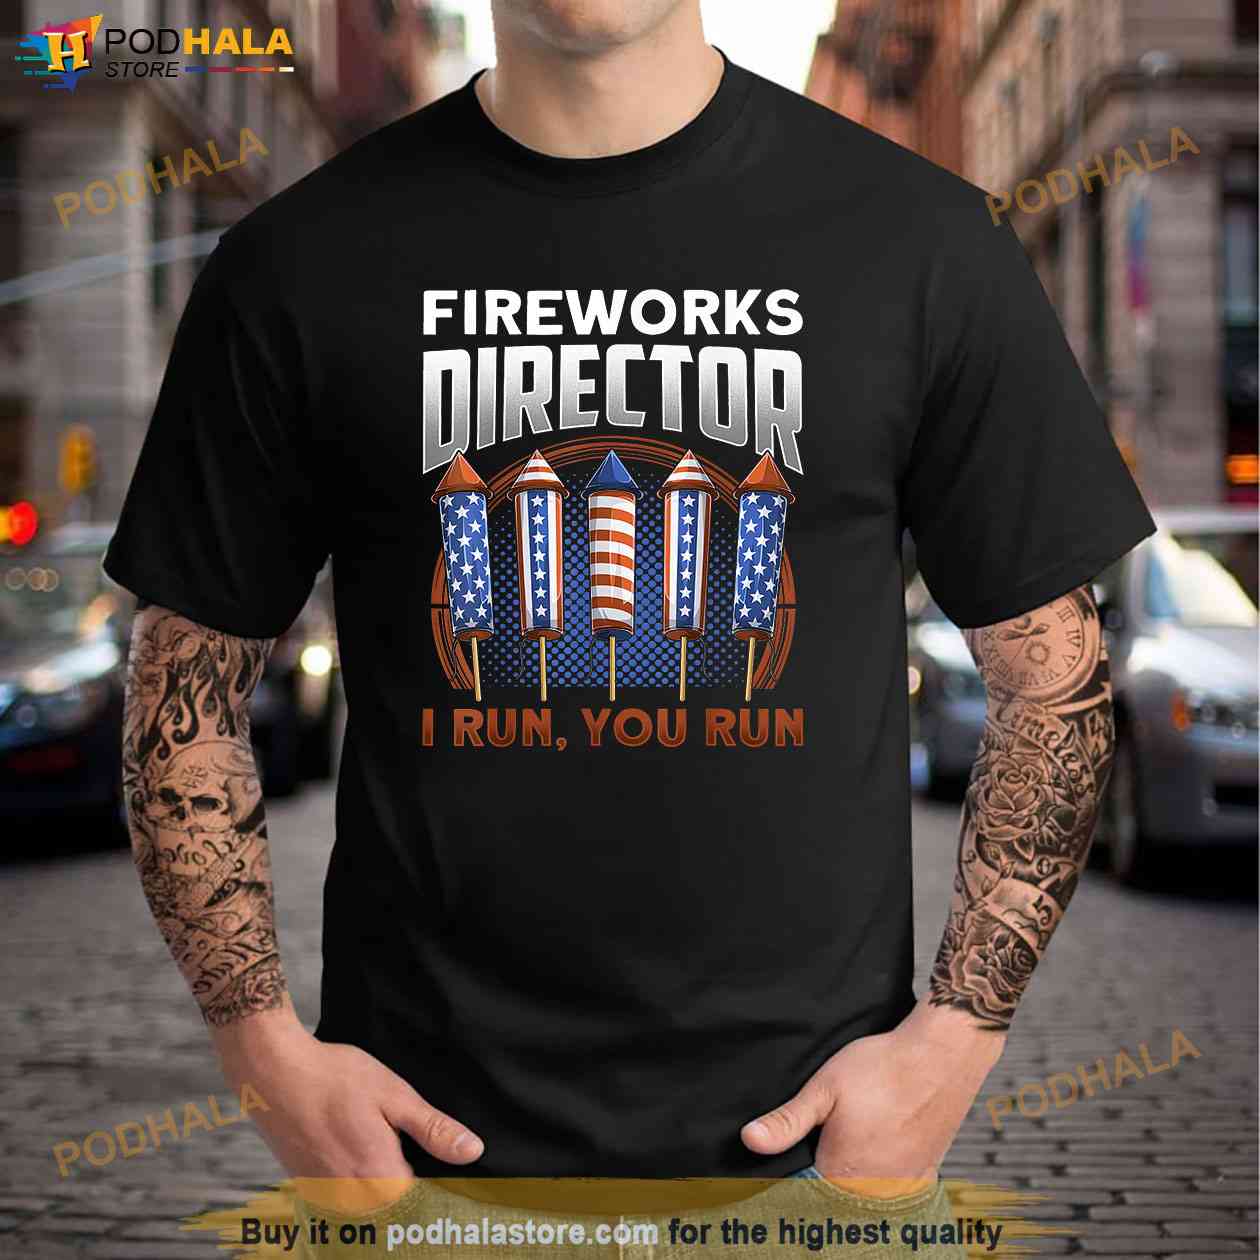 Men's American Eagle Flag Fireworks T-Shirt | The Flag Shirt | 3X